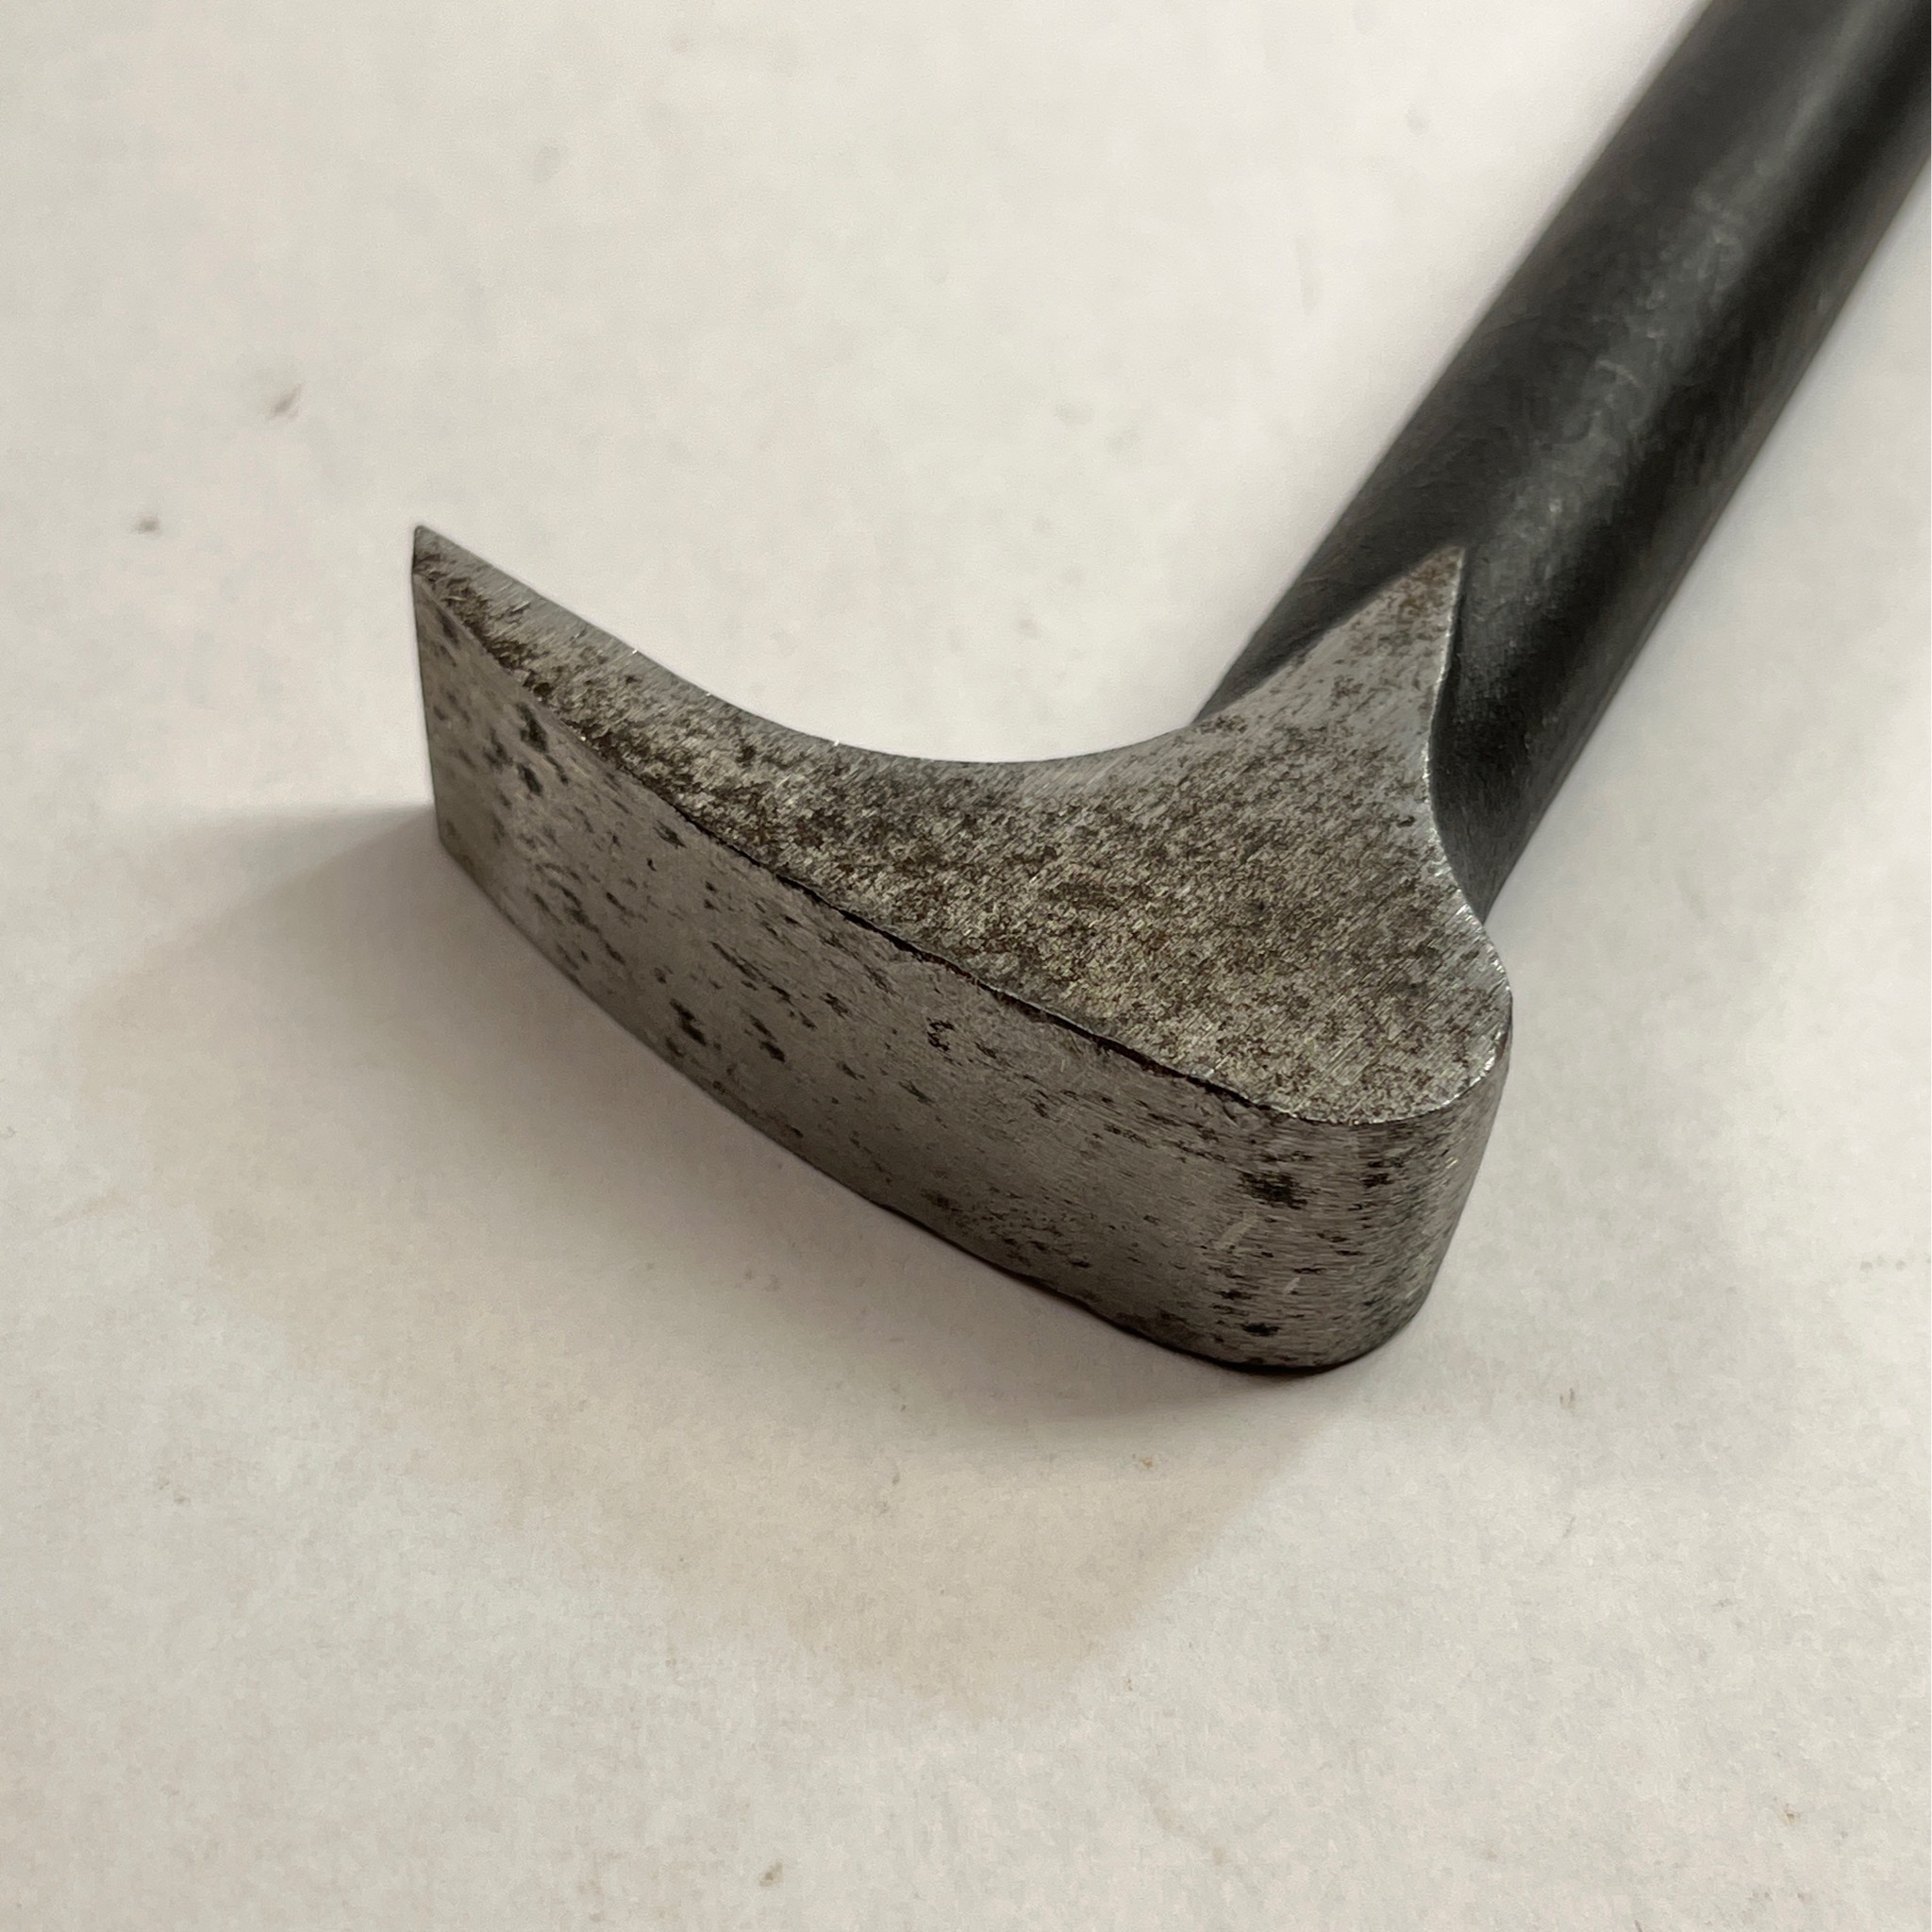 Large Pry Bar Spoon 2524200 Bumping Tool – Blacksmith Source Tool Company